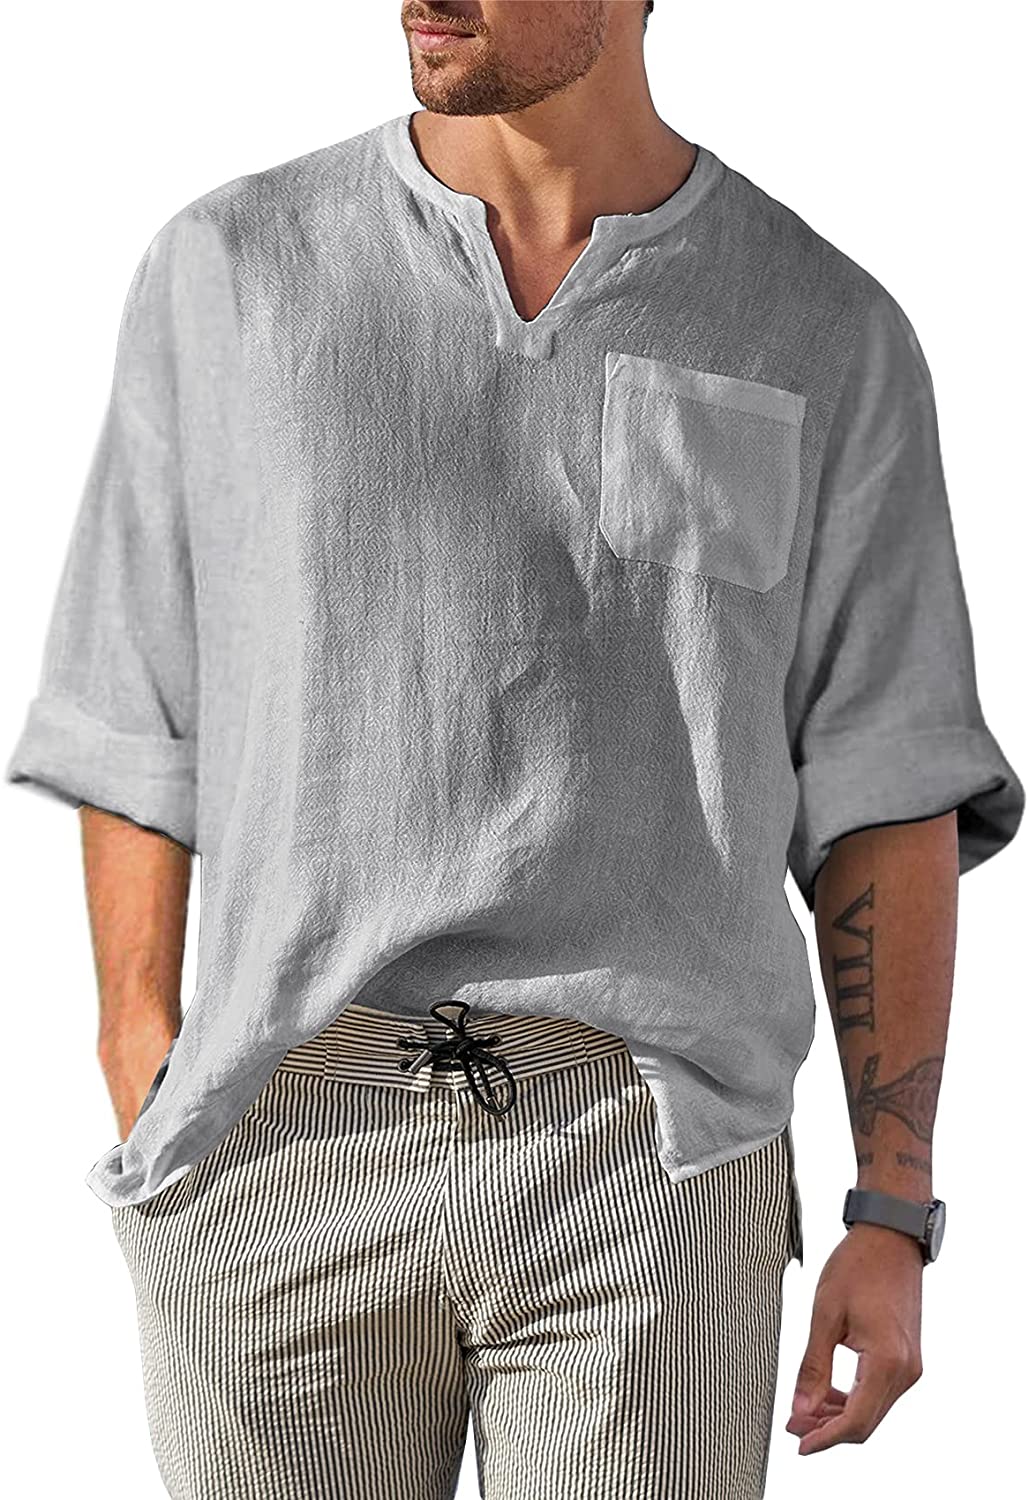 Bbalizko Mens Linen Cotton Henley Shirt Casual V Neck Short Sleeve Beach Hippie Yoga Tees Plain Summer Tops 